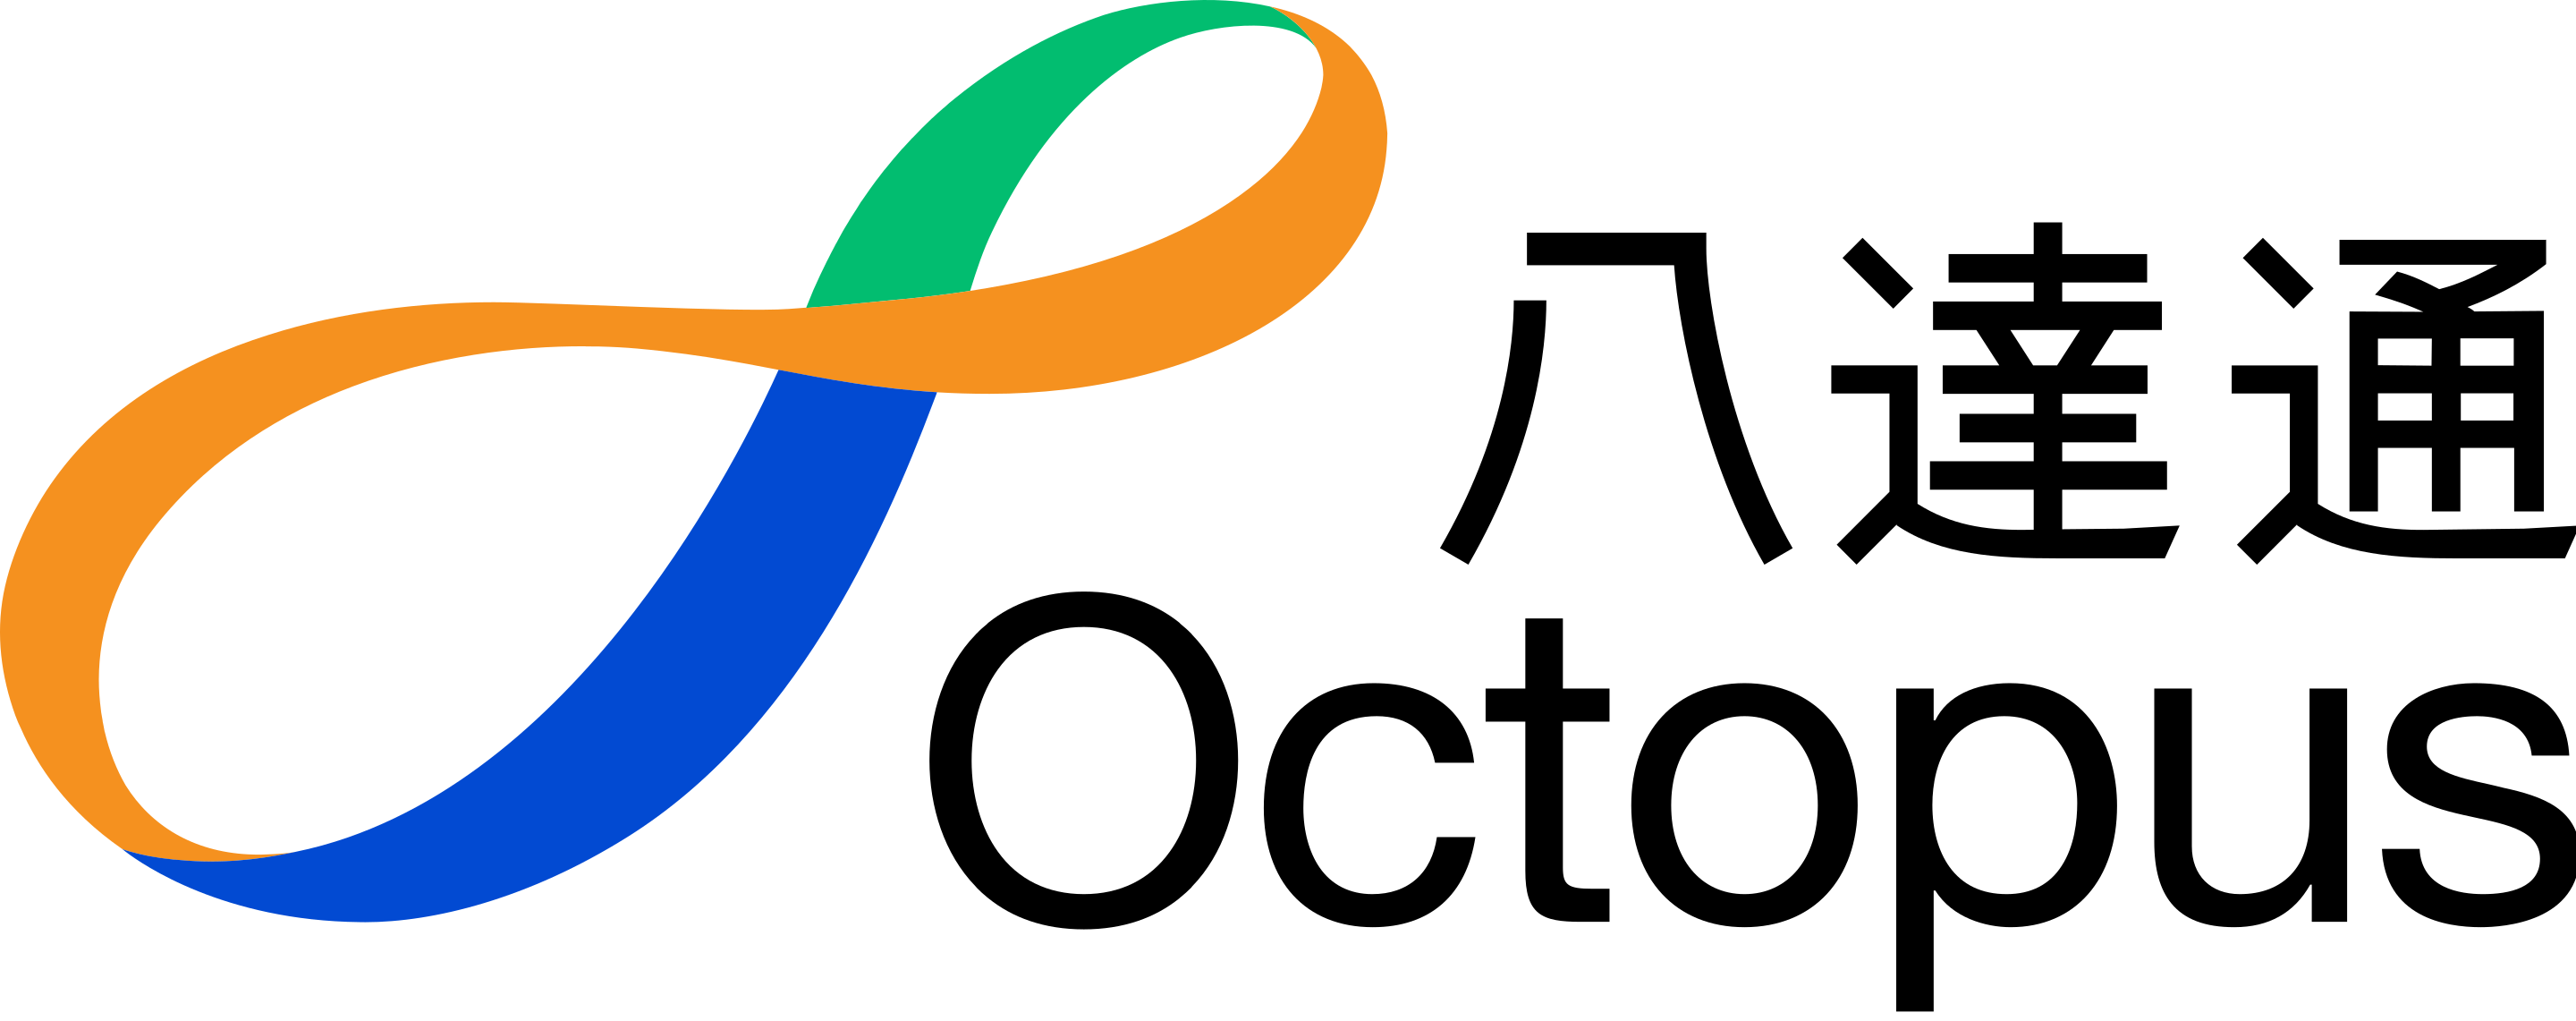 AlipayHK-logo.png